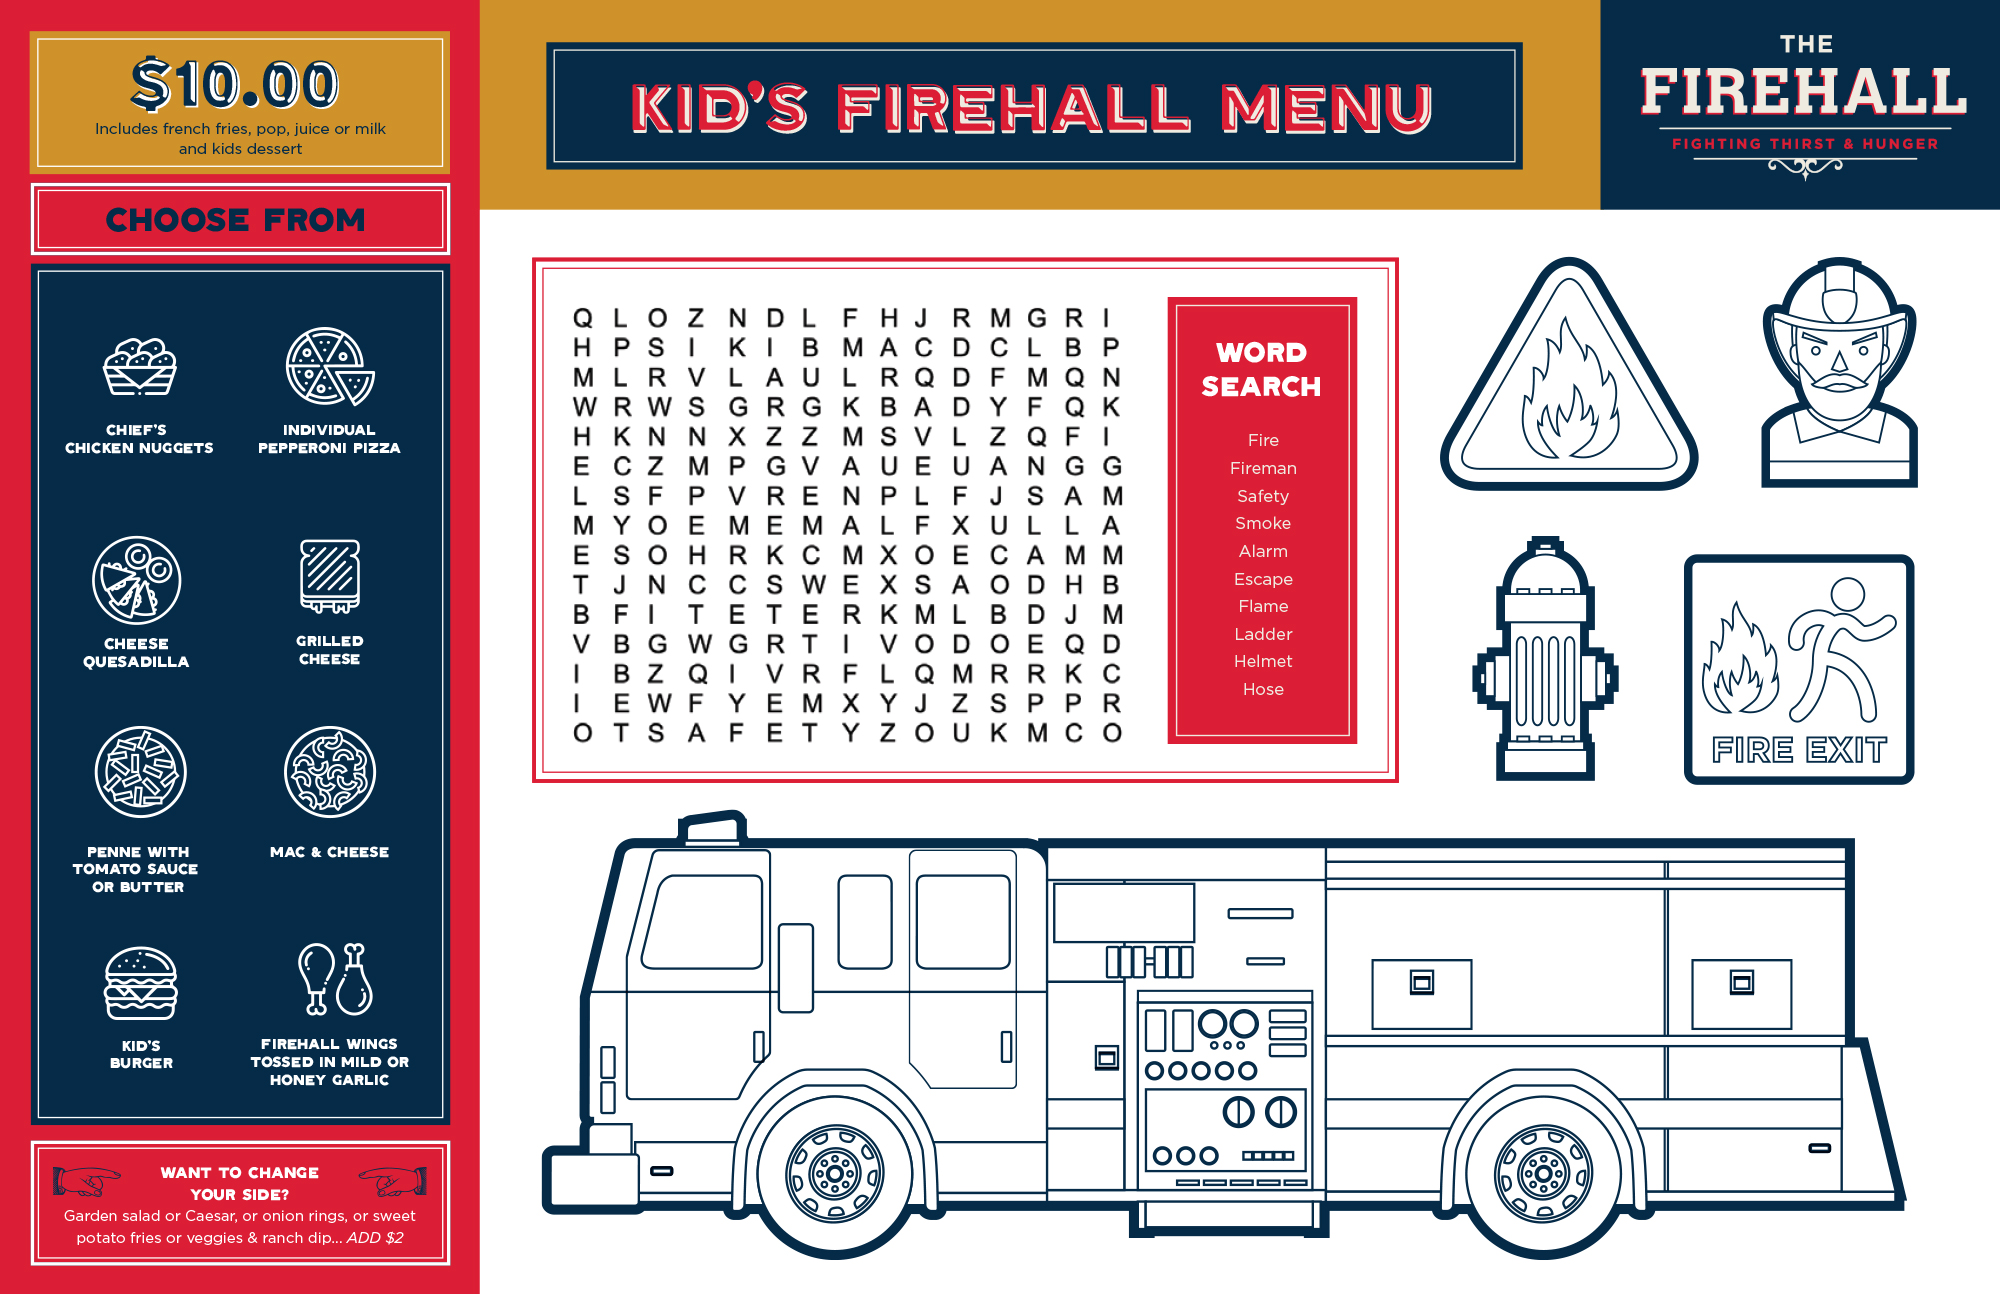 The Firehall kids menu in Oakville